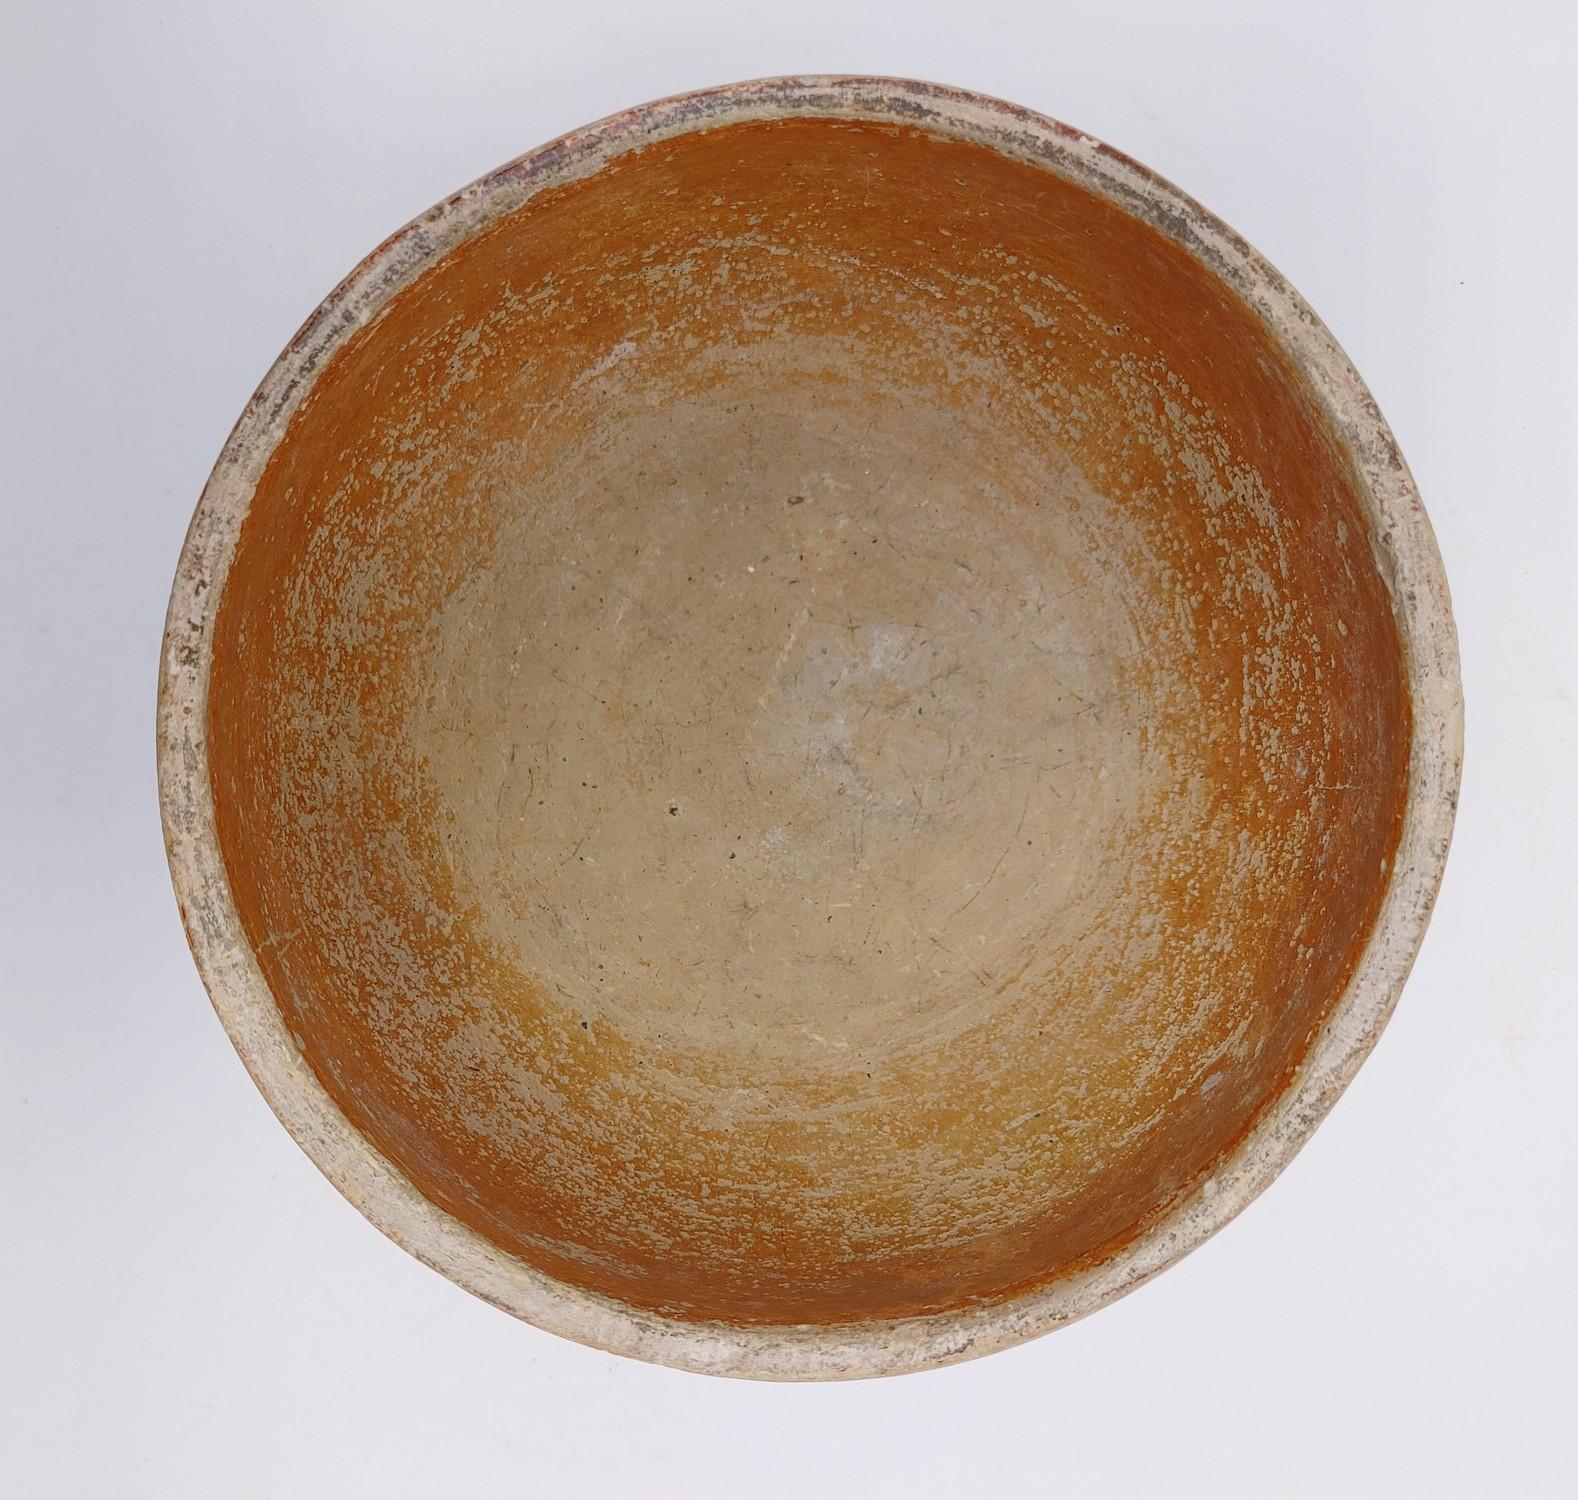 Pre-Columbian Mayan Polychrome Clay Bowl